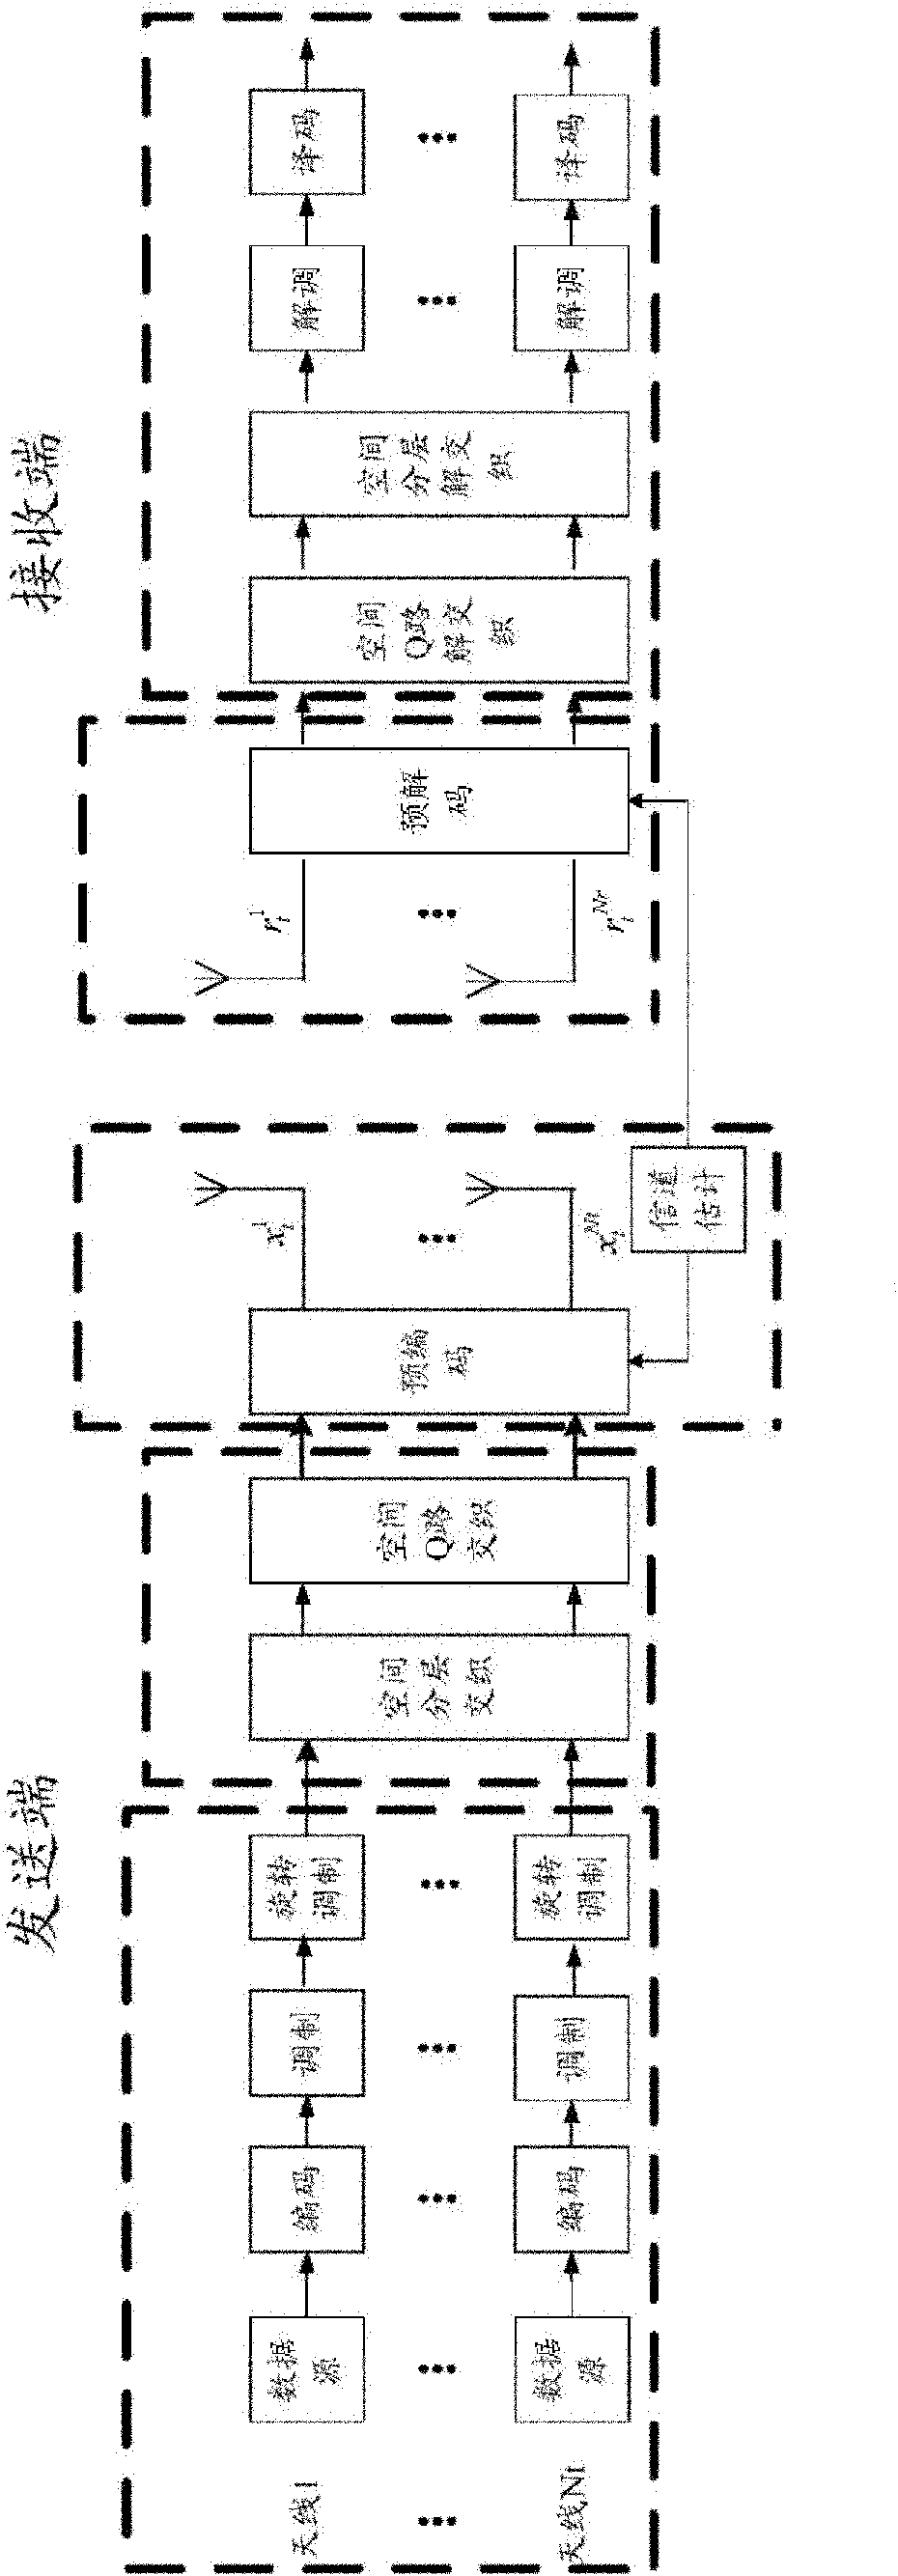 Modulation method based on multiple-input multiple-output wireless communication system